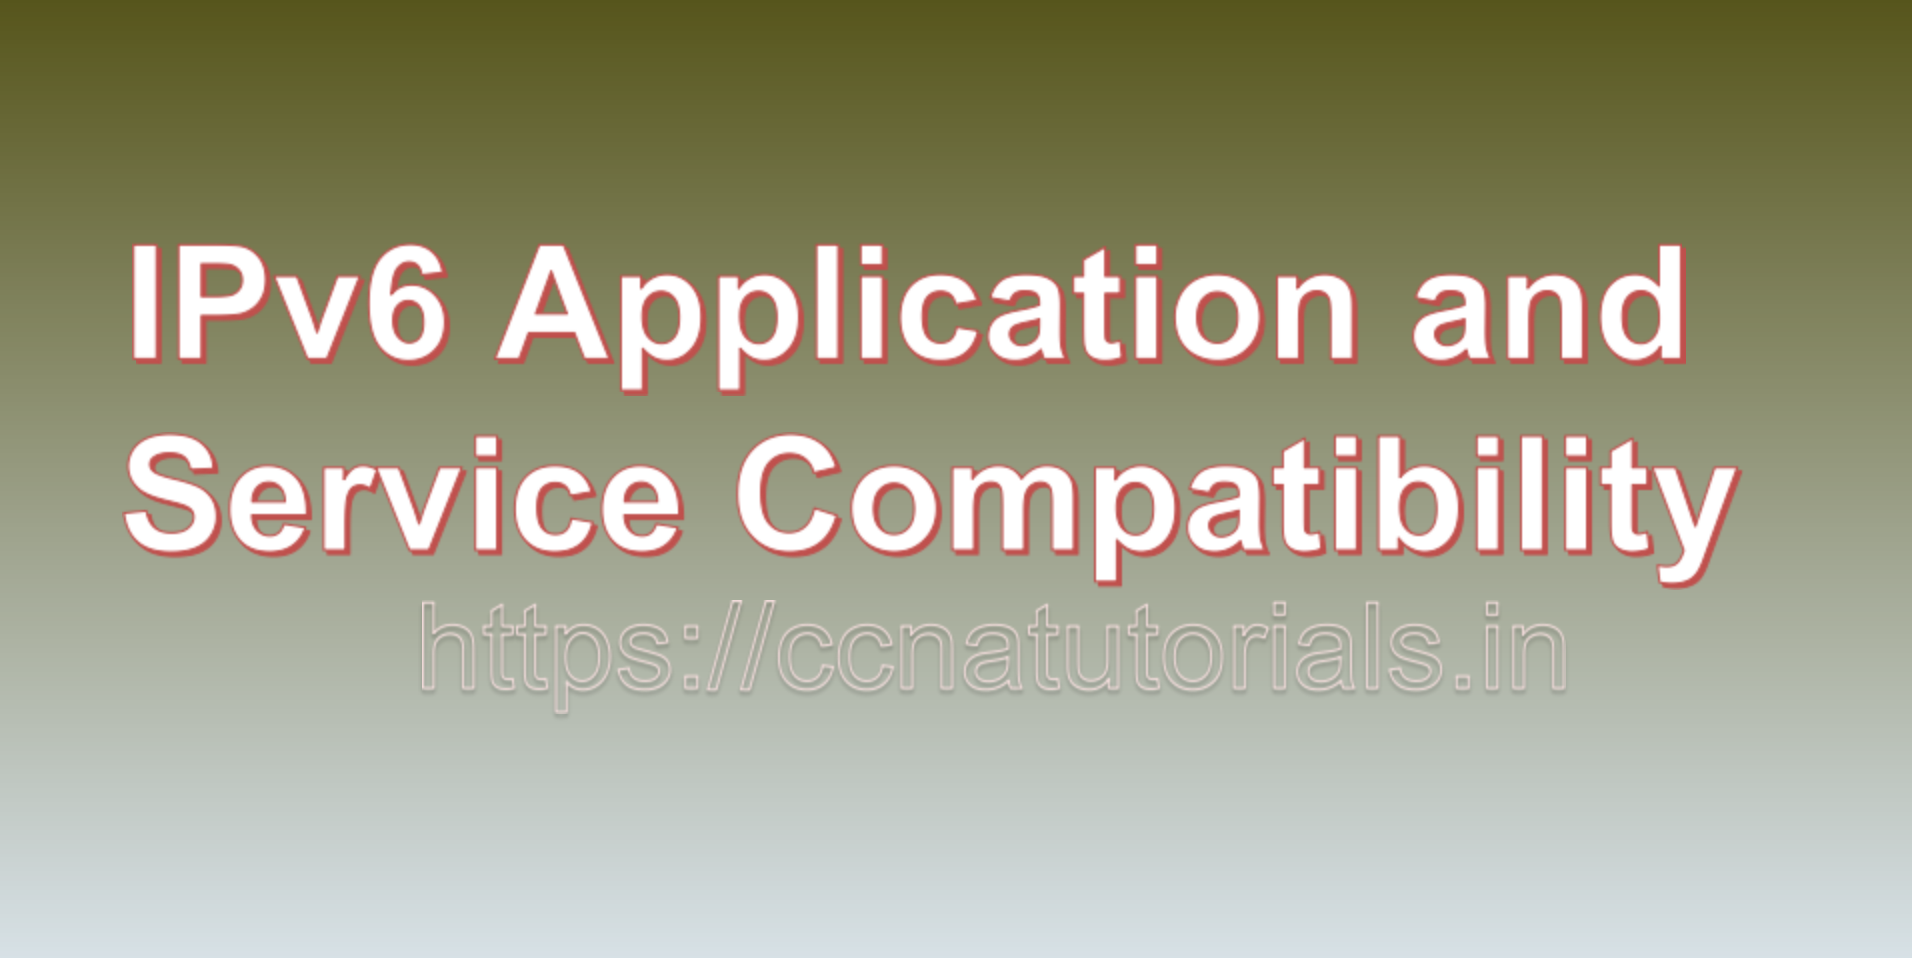 IPv6 Application and Service Compatibility, ccna, ccna tutorials